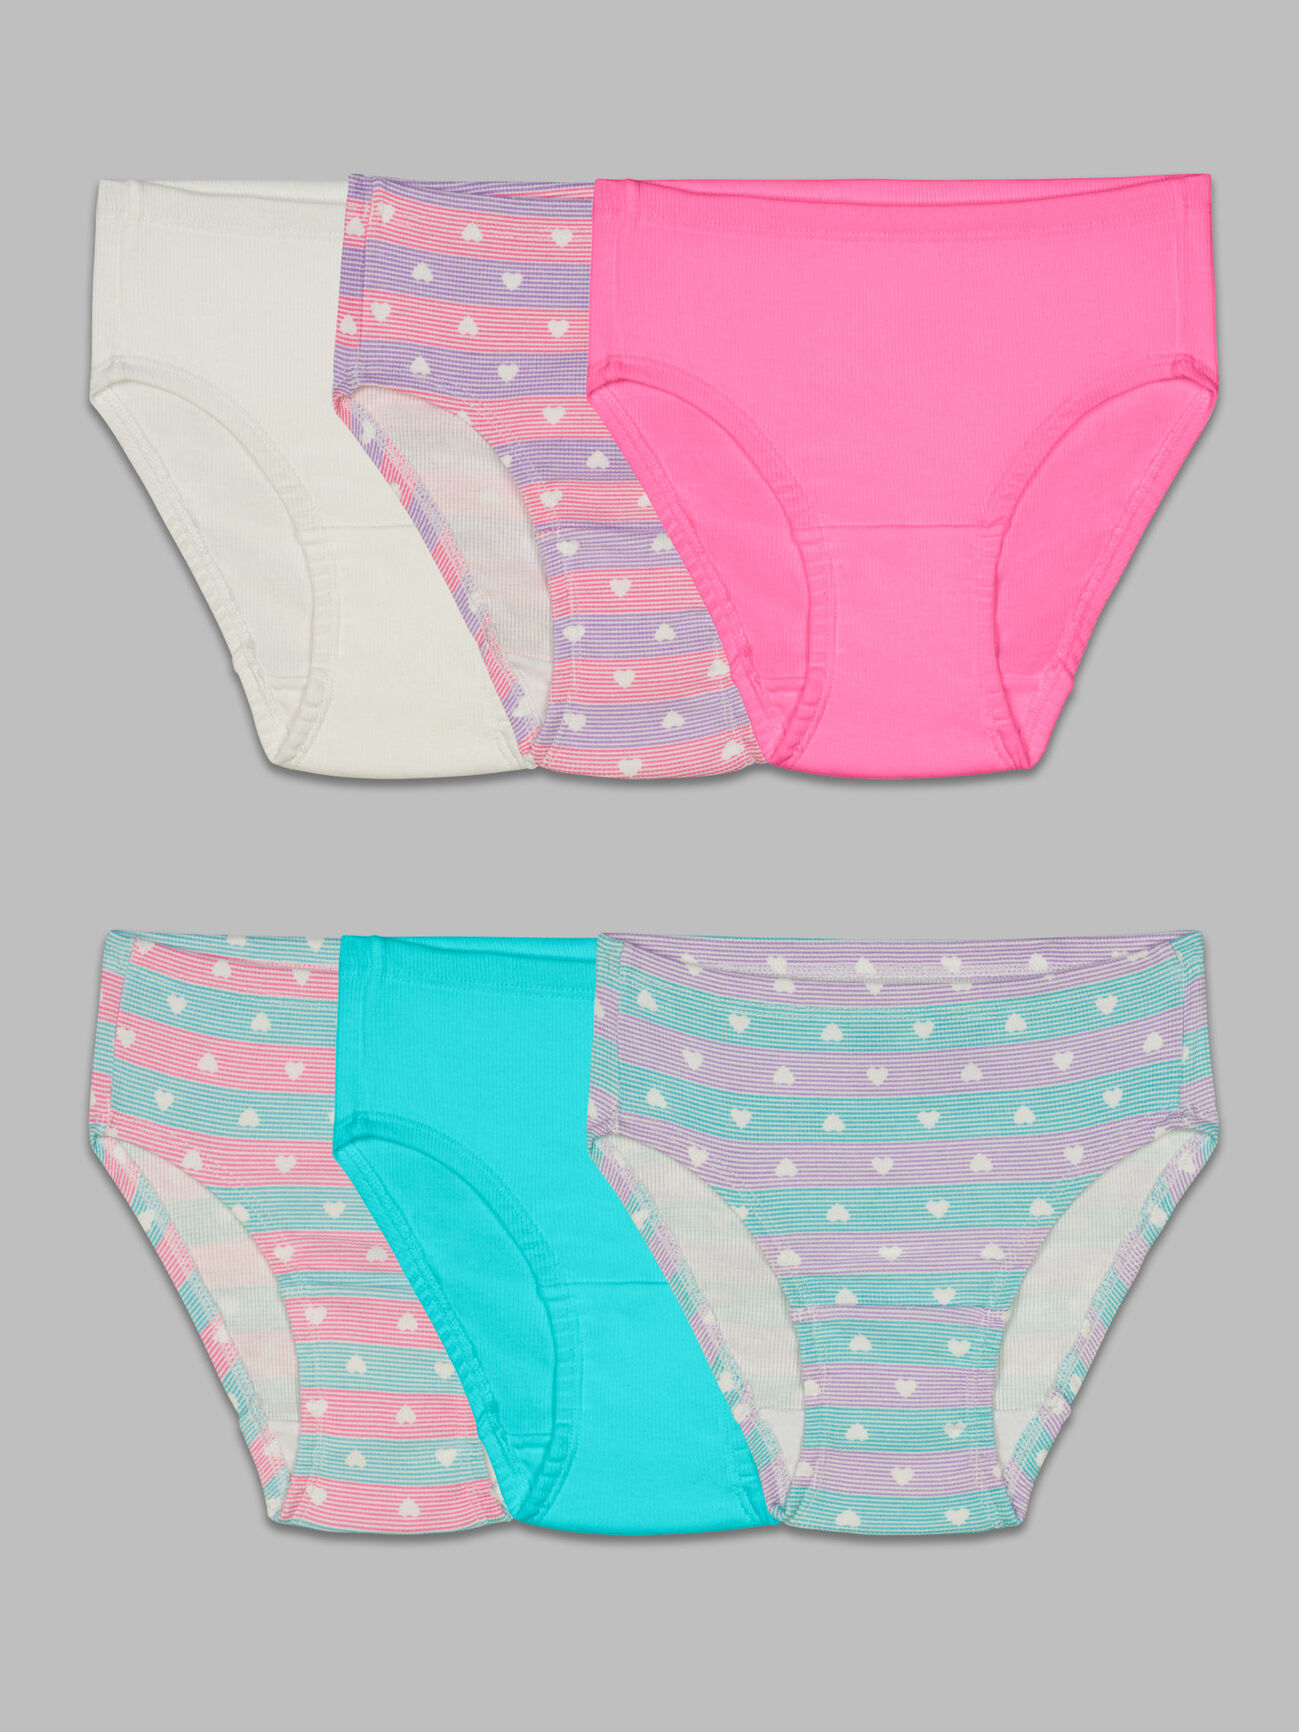 New Carter's 3 Pack Underwear Girls Panties Strawberry, Watermelon